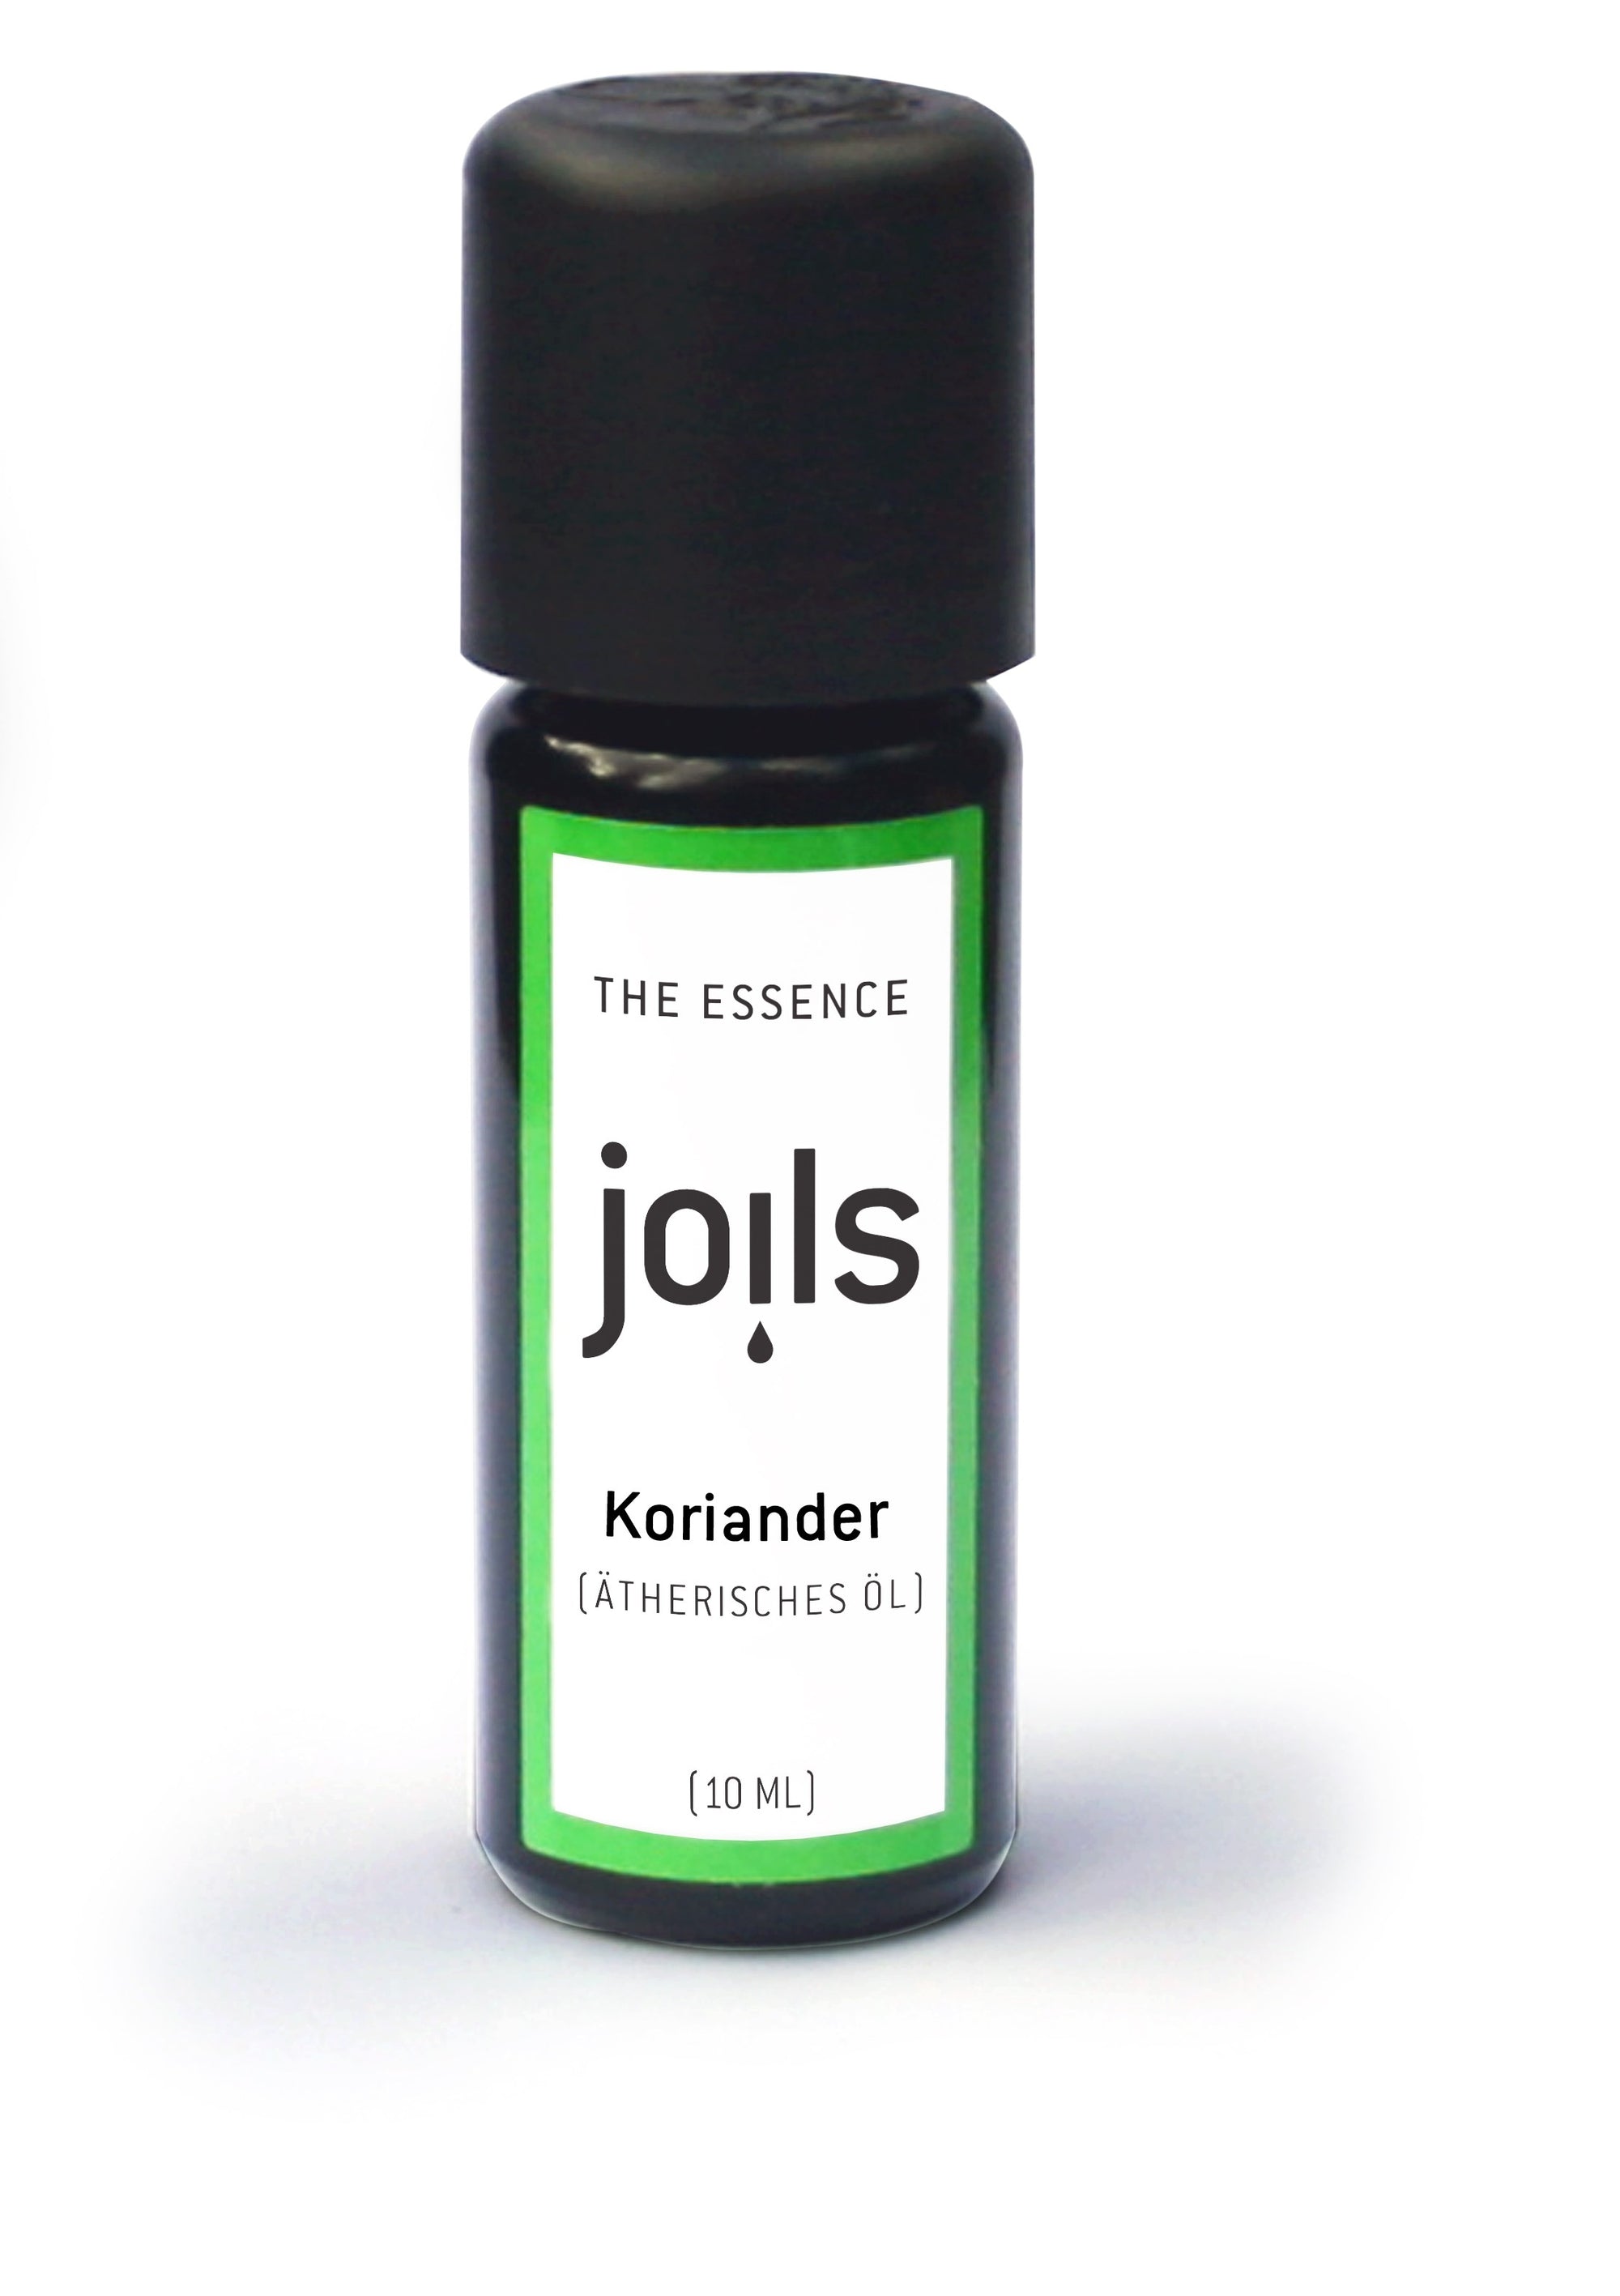 KORIANDER 10ml - Joils